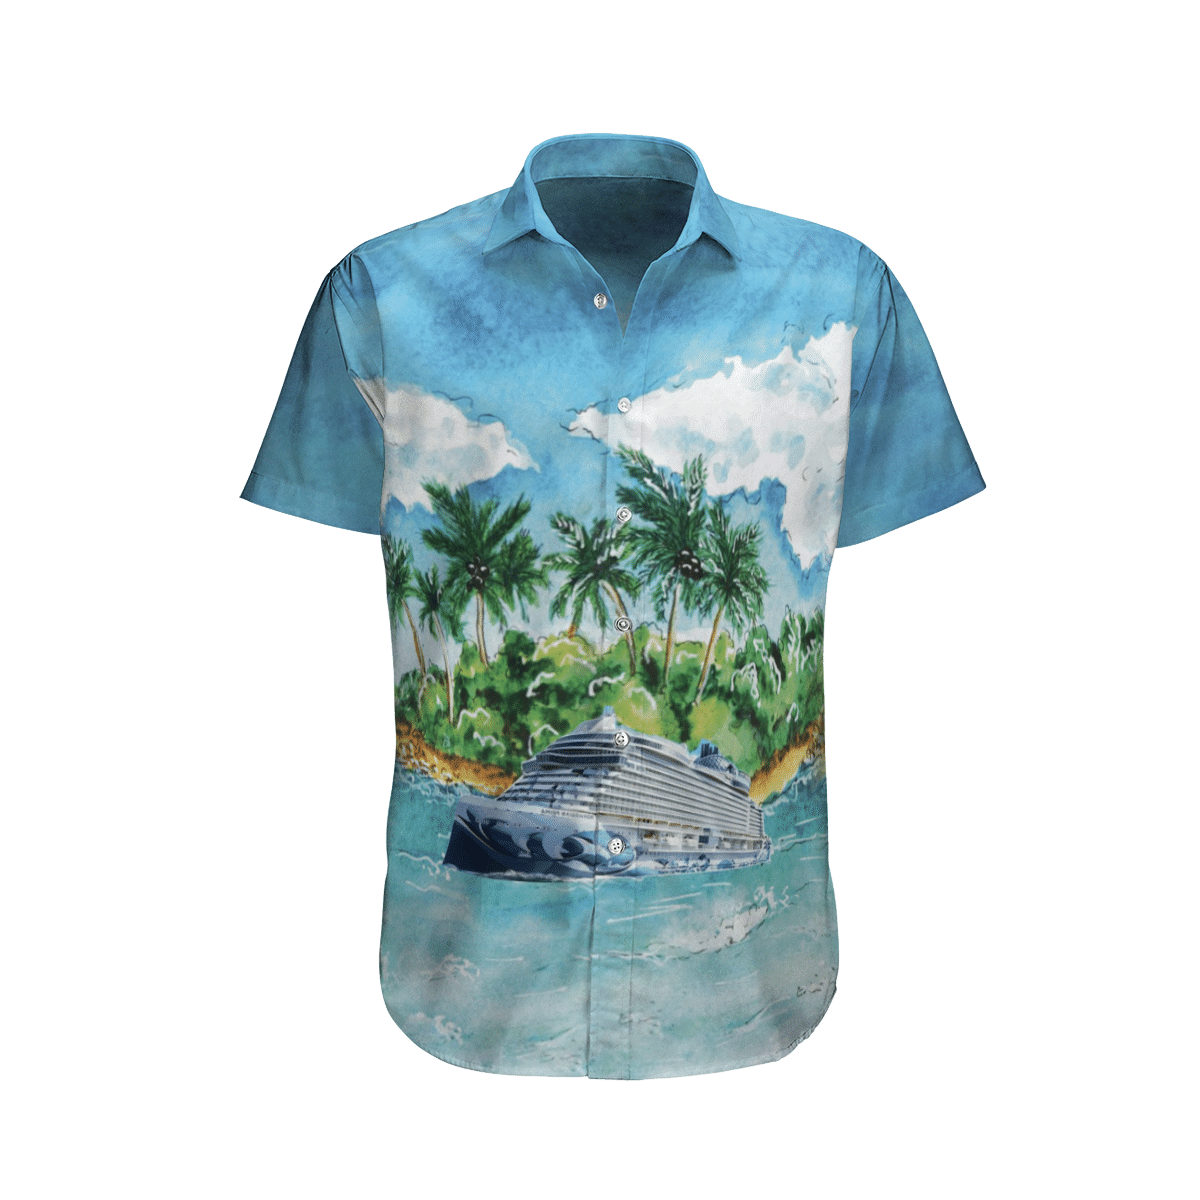 Get a new Hawaiian shirt to enjoy summer vacation 186